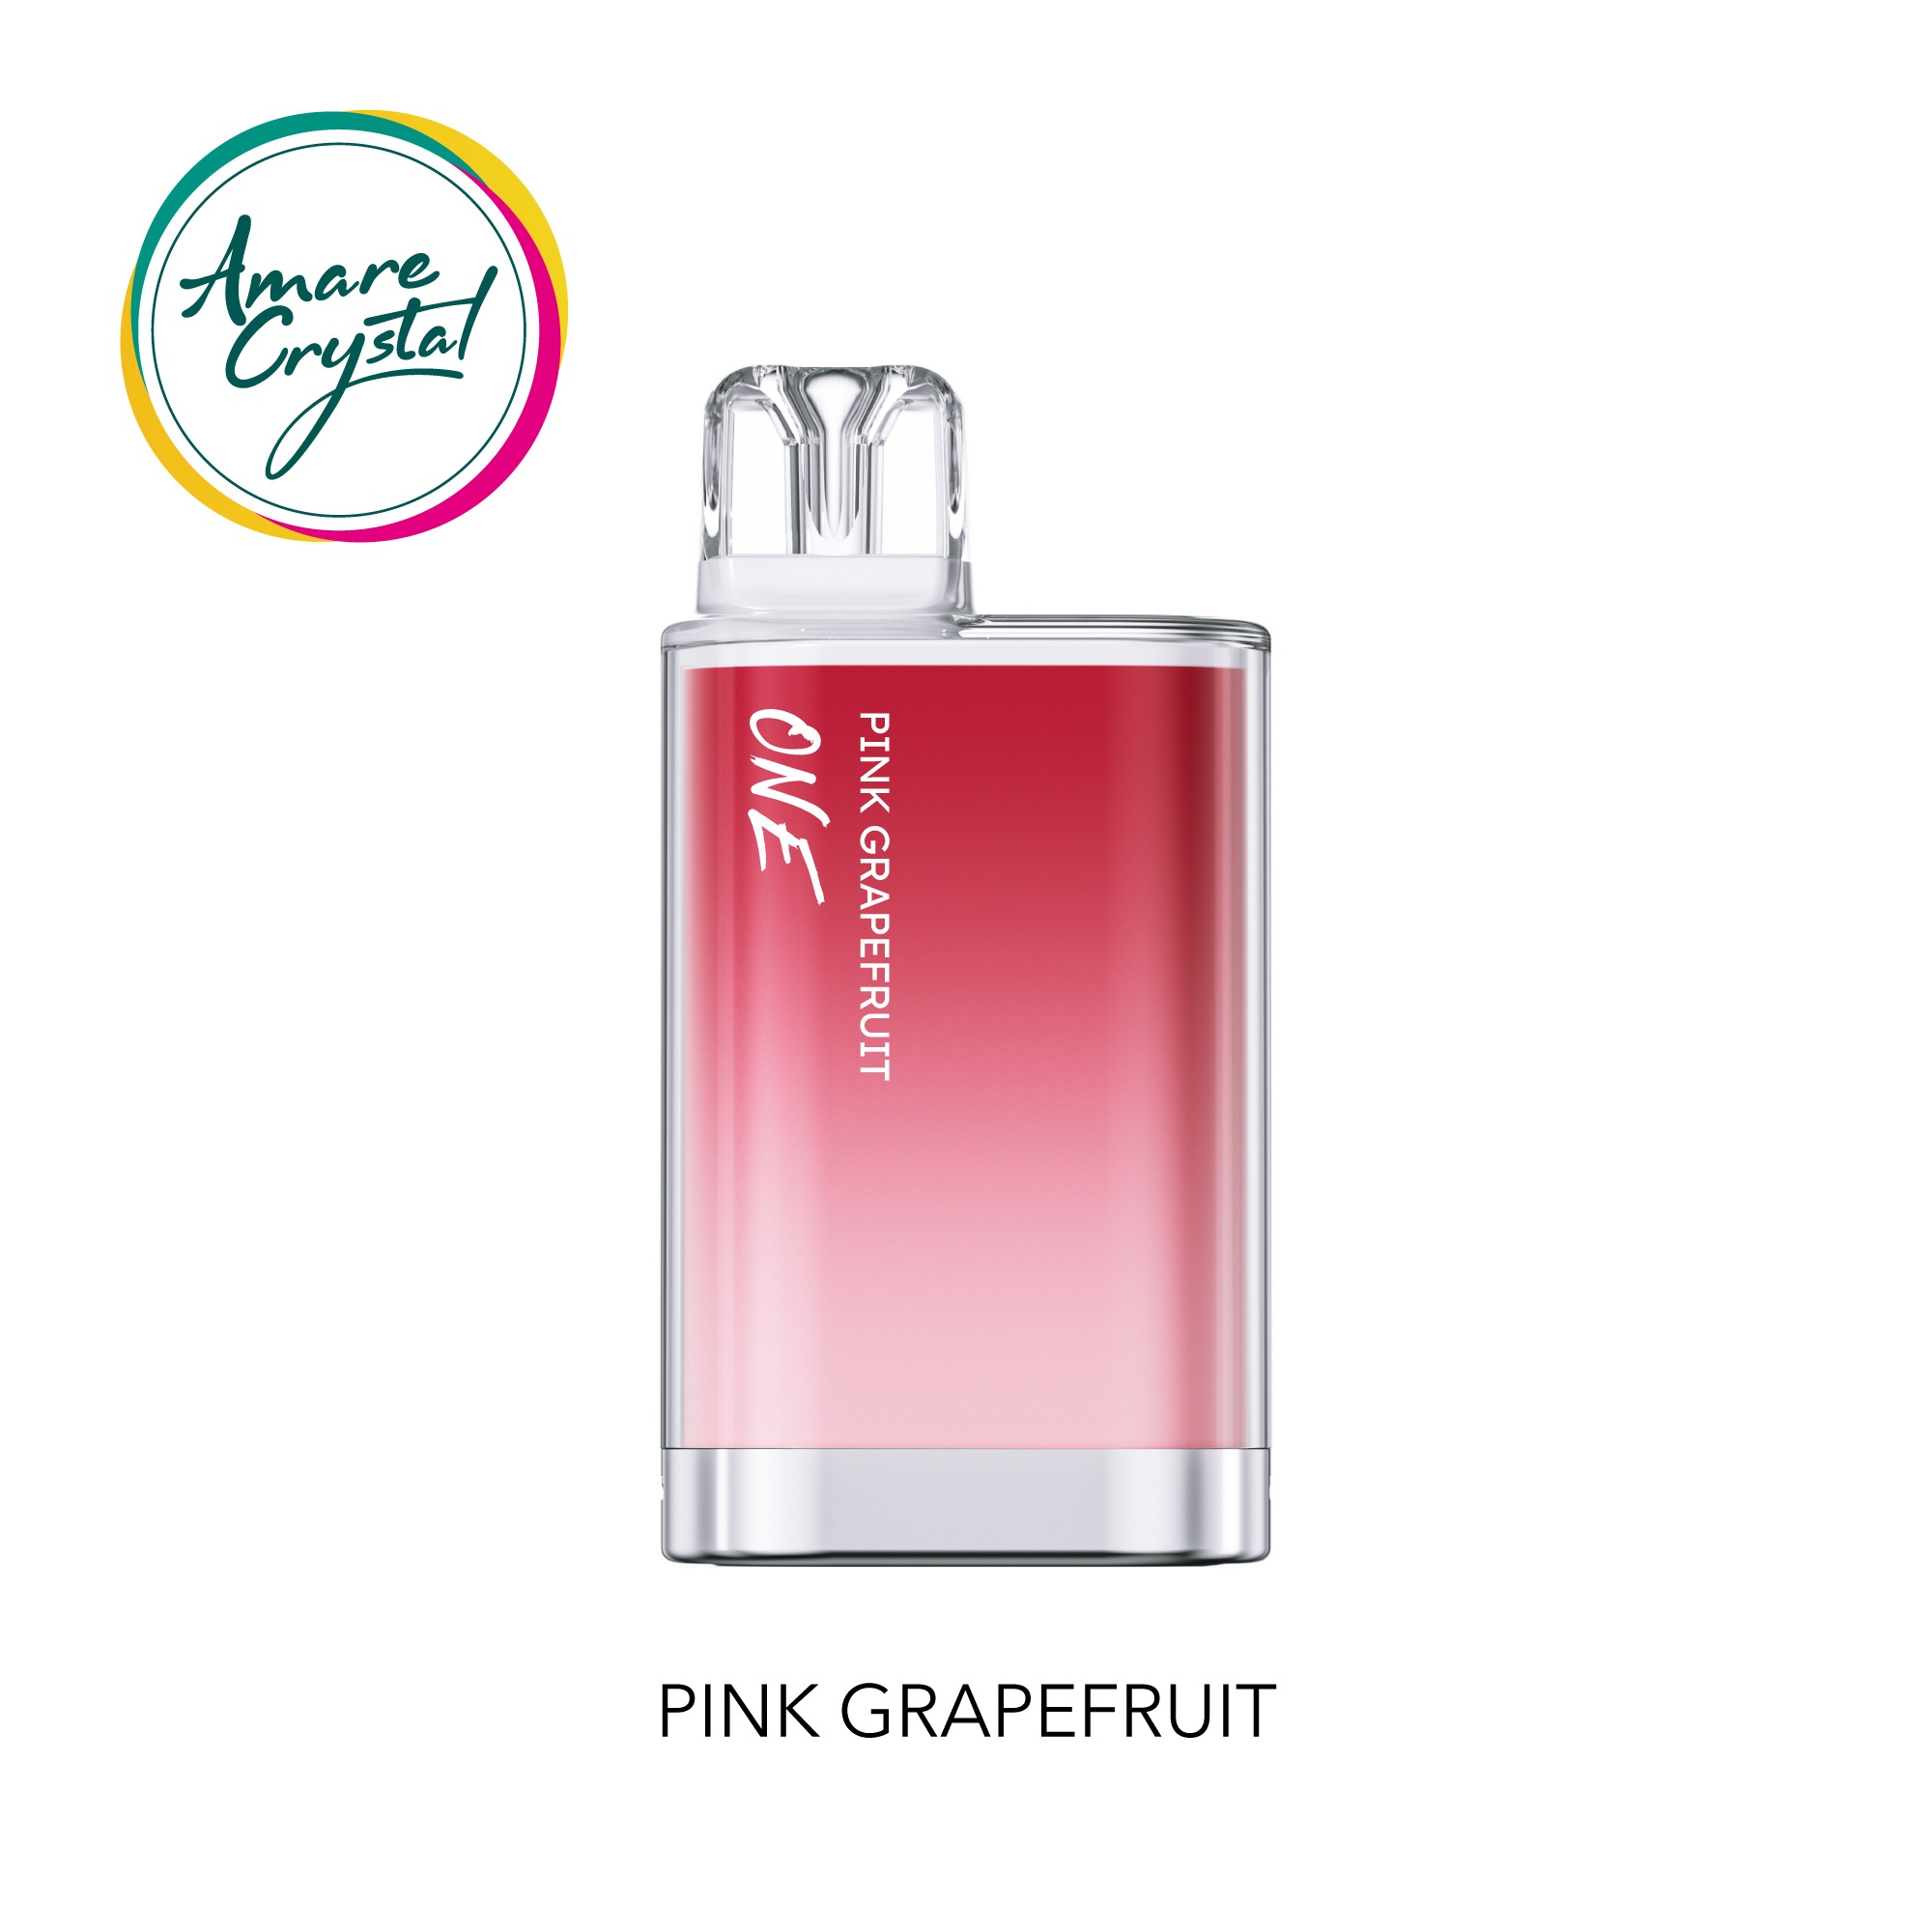 Amare Crystal One - Pink Grapefruit